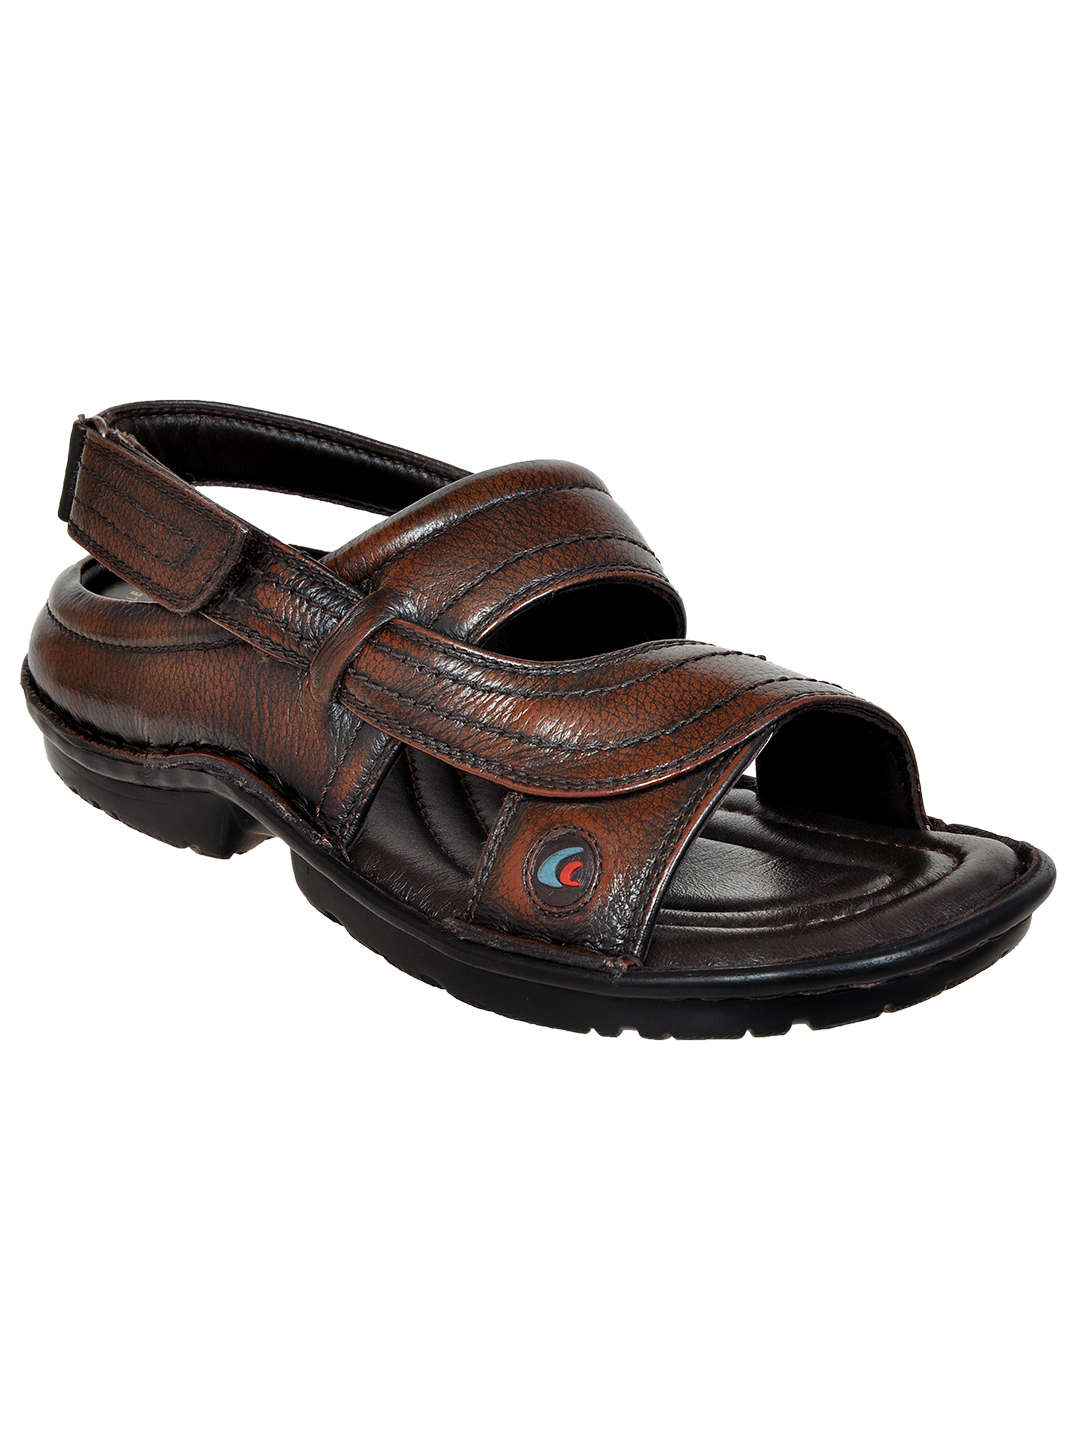 Leather sandals Marimekko Navy size 40 EU in Leather - 25139671